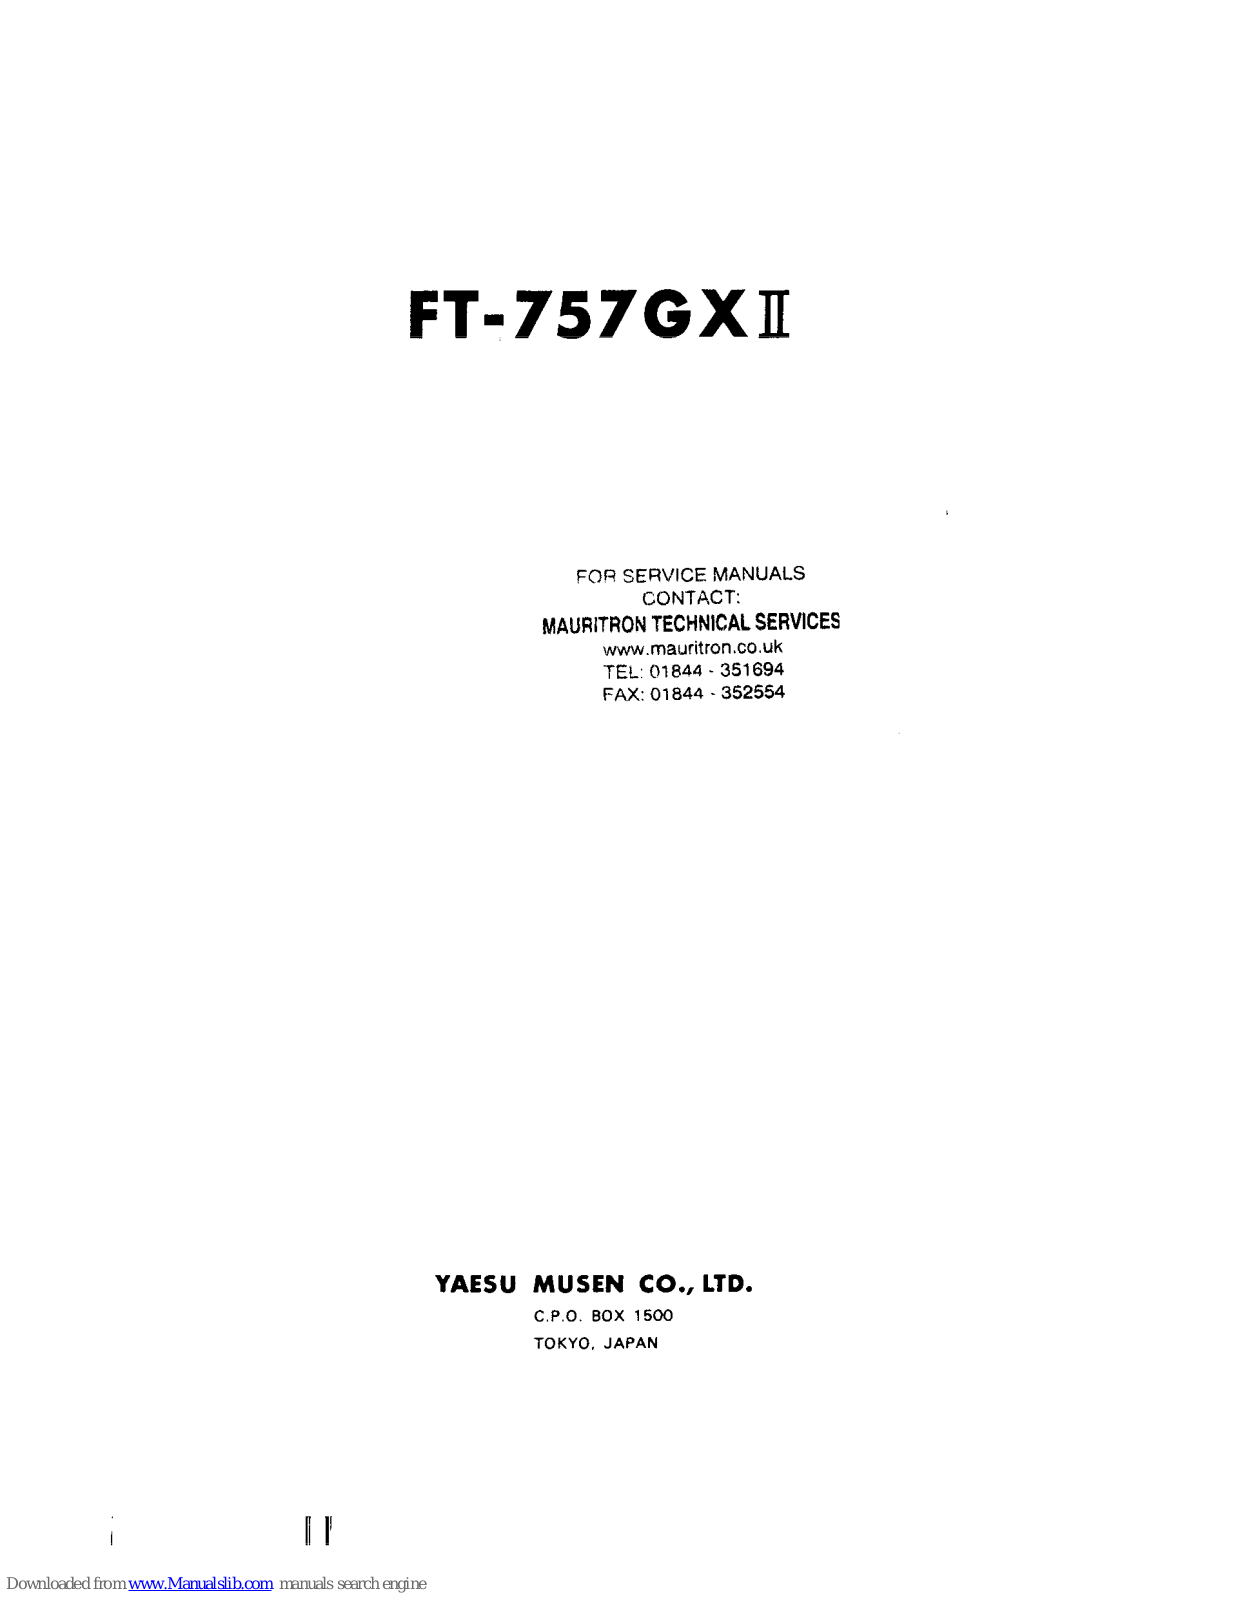 Yaesu FT-757GX II - TECHNICAL, FT-757GX II Supplement Manual